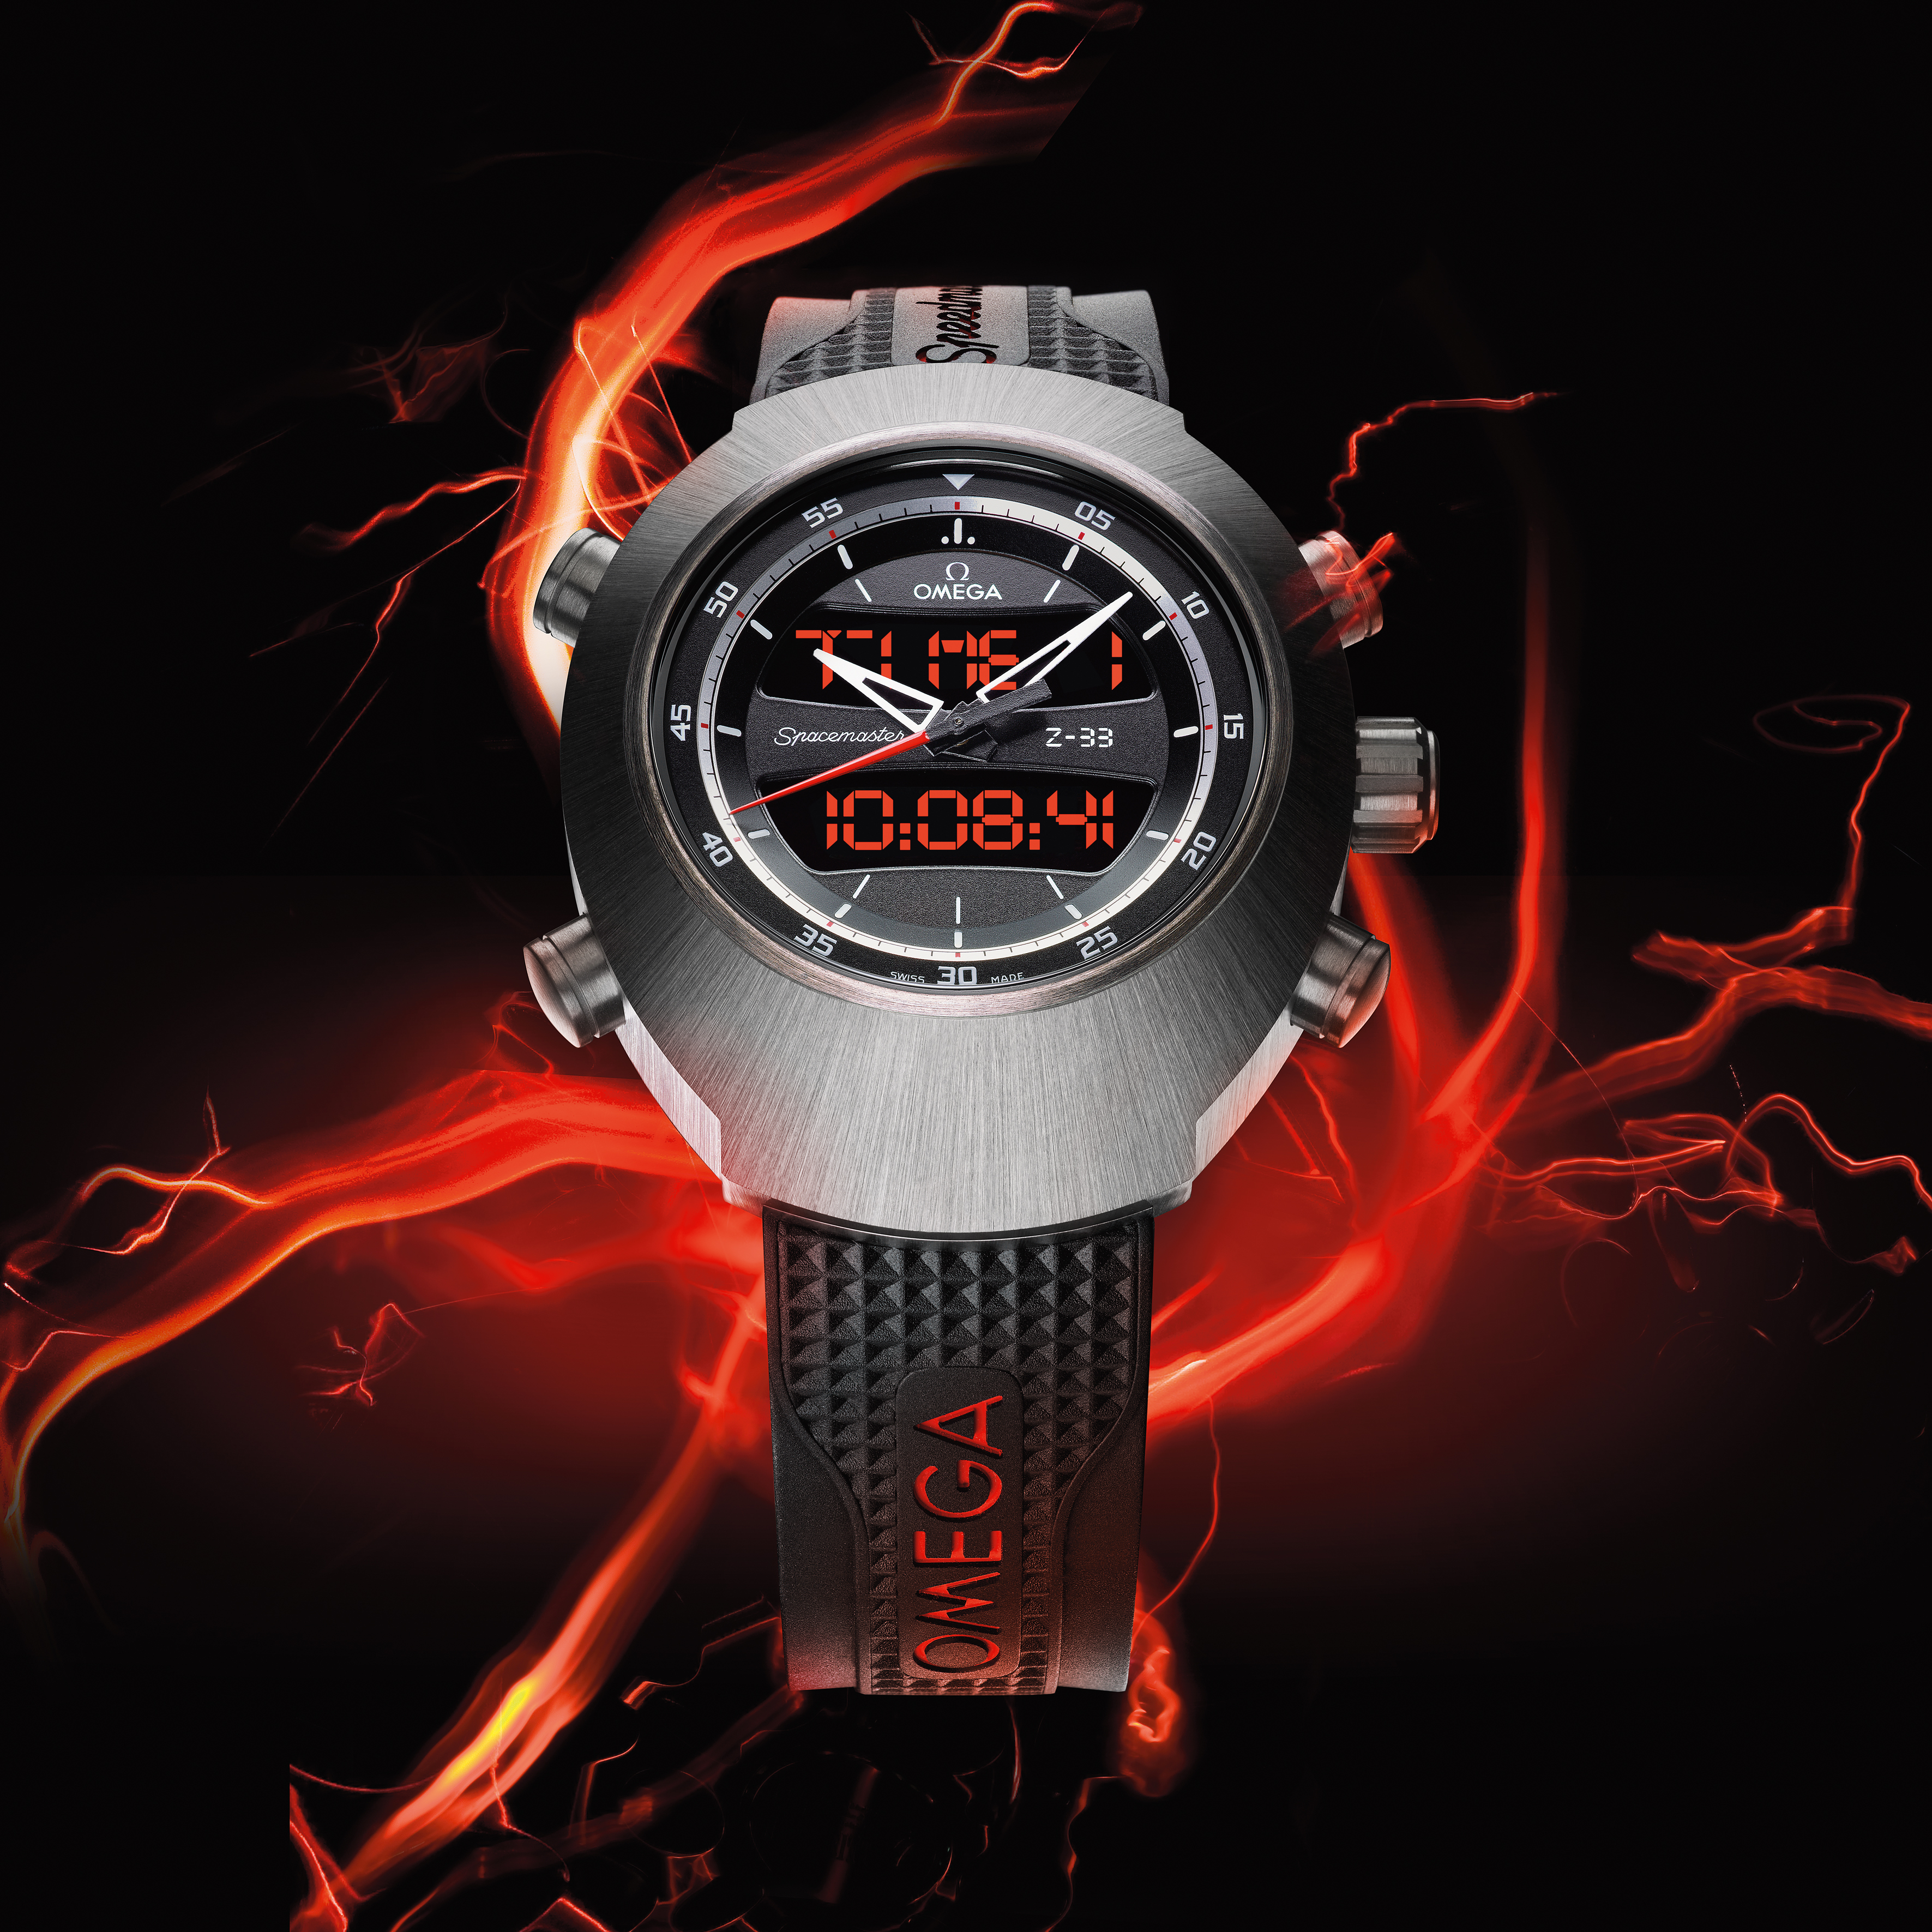 Speedmaster Spacemaster Z-33 Watches | OMEGA US®